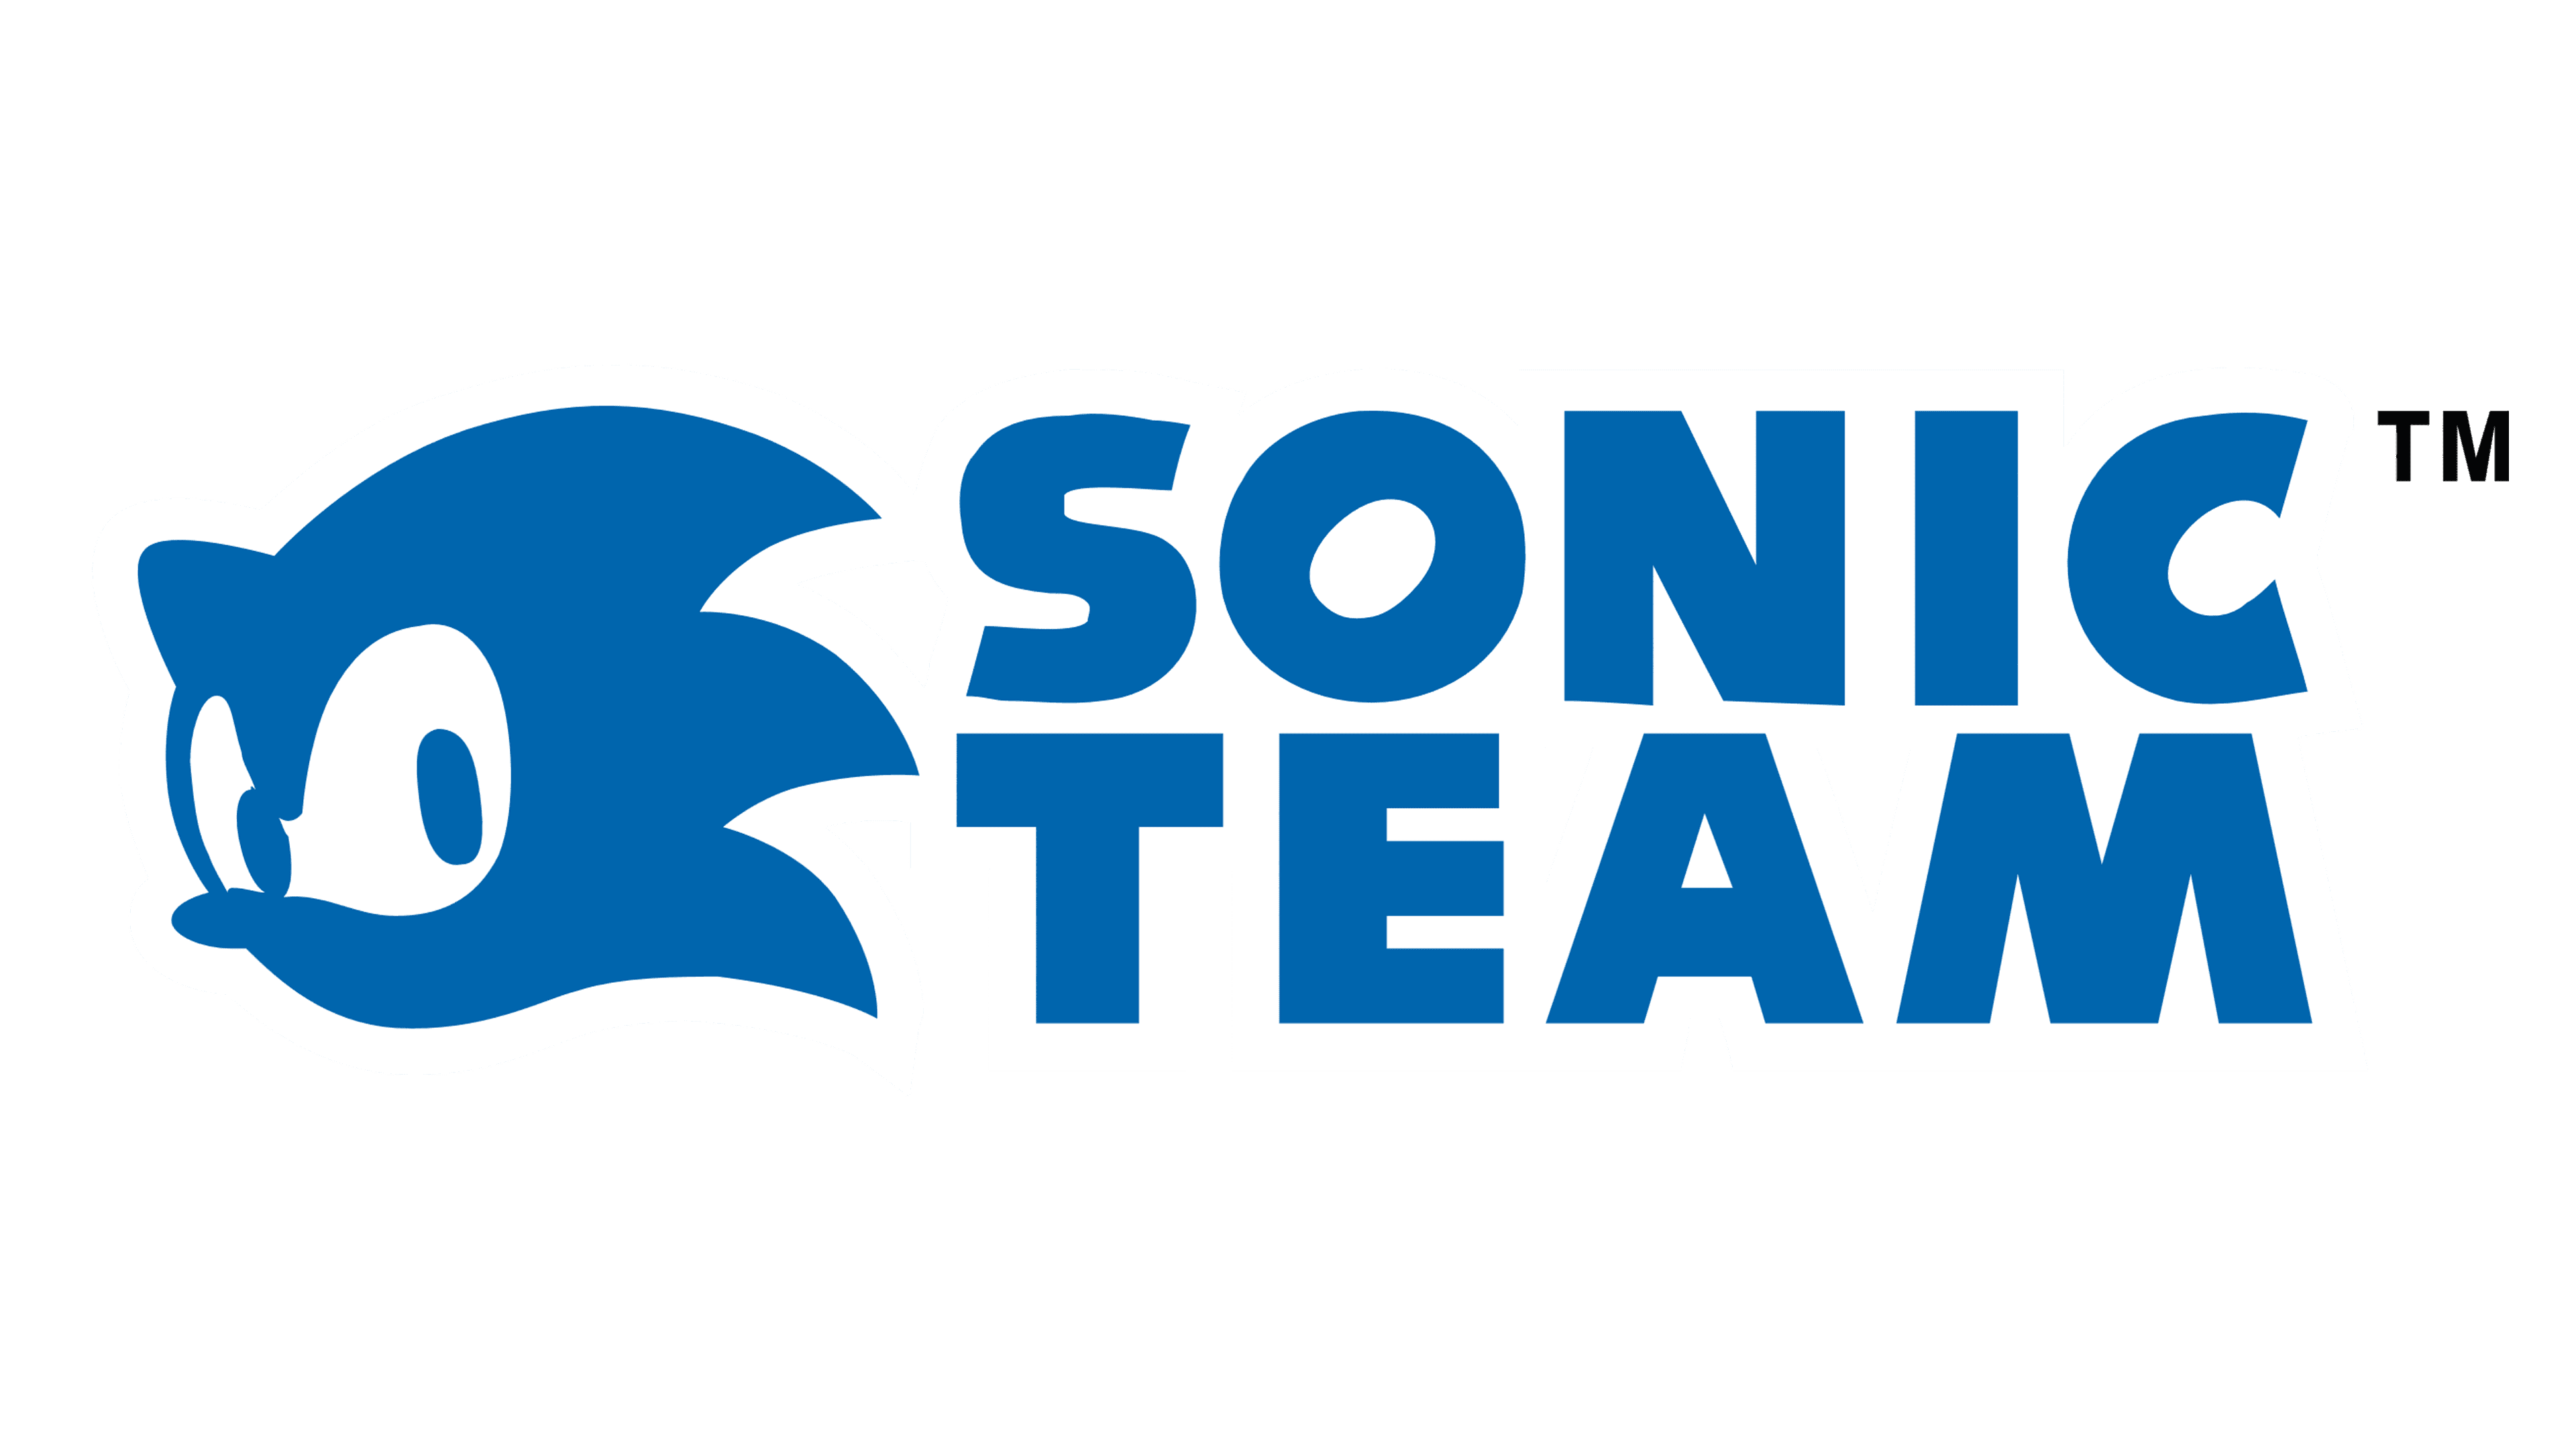 sonic the hedgehog logo font